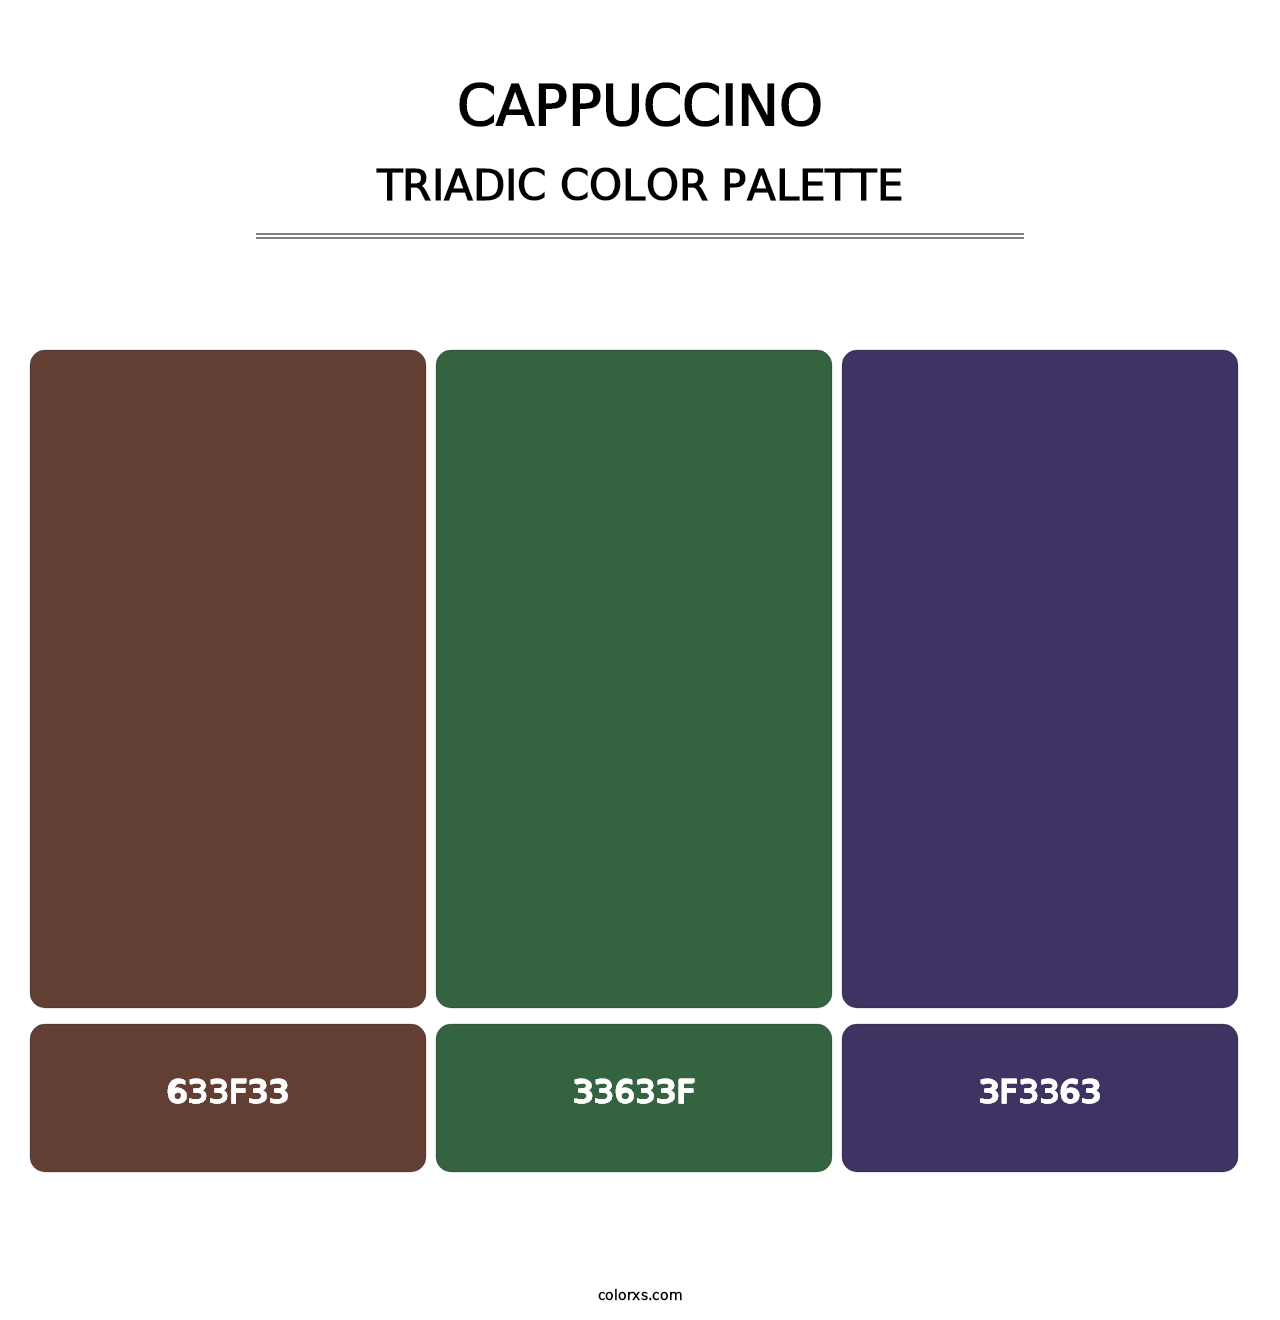 Cappuccino - Triadic Color Palette